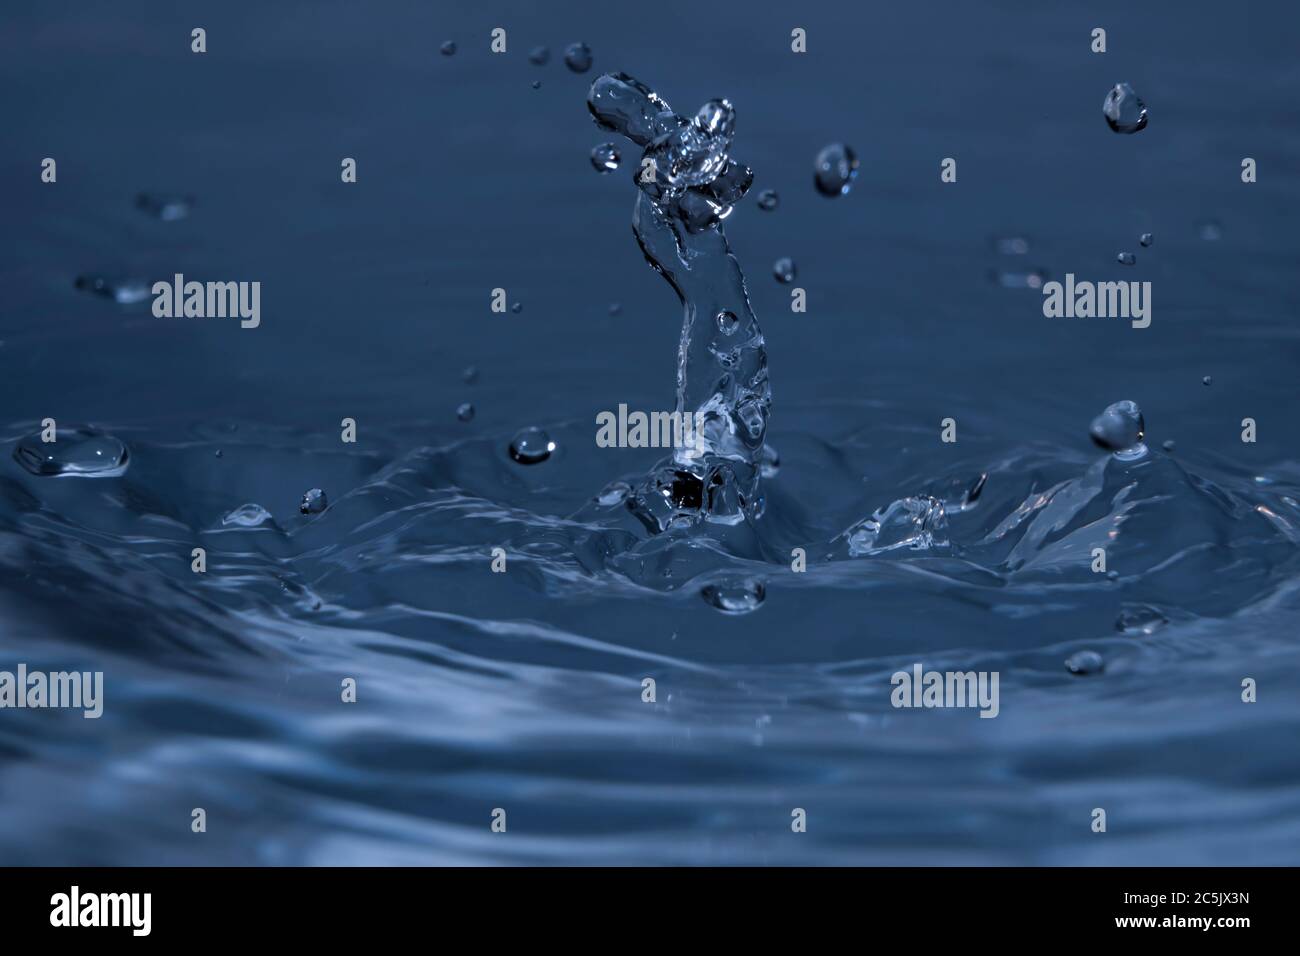 Splashing water drops causing wavy water surface and water column Stock Photo